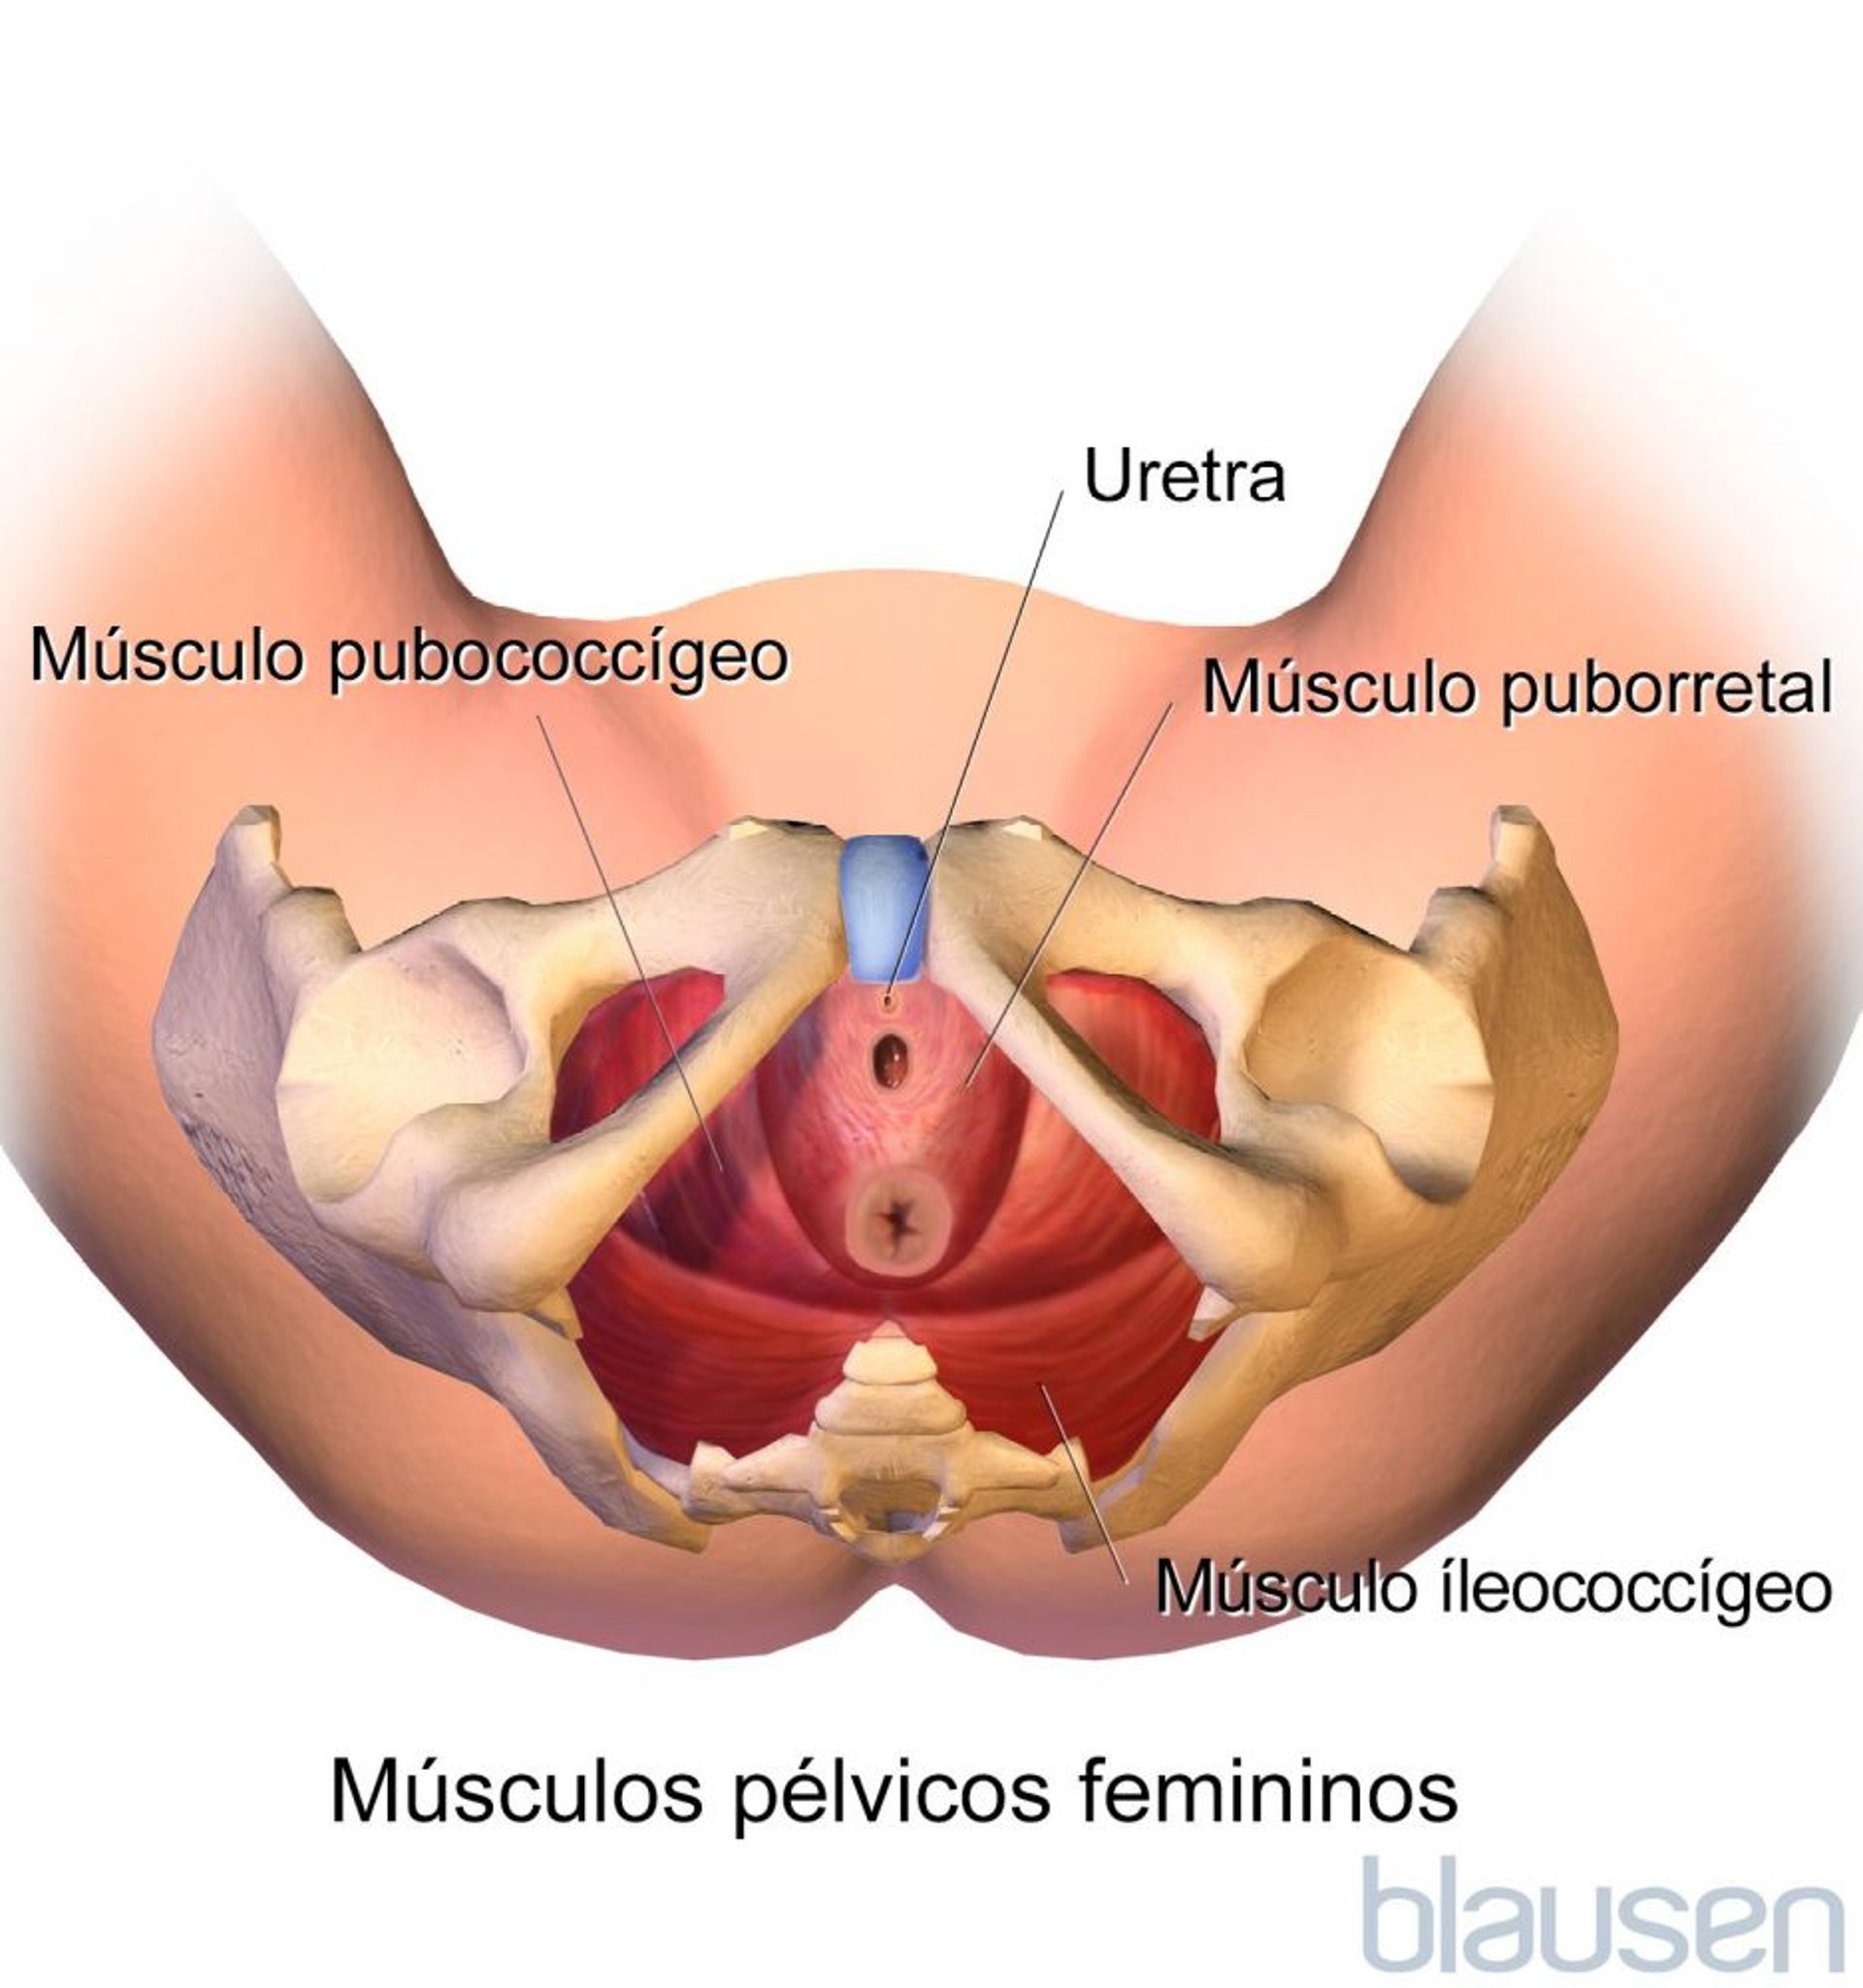 Músculos pélvicos femininos (visão inferior)